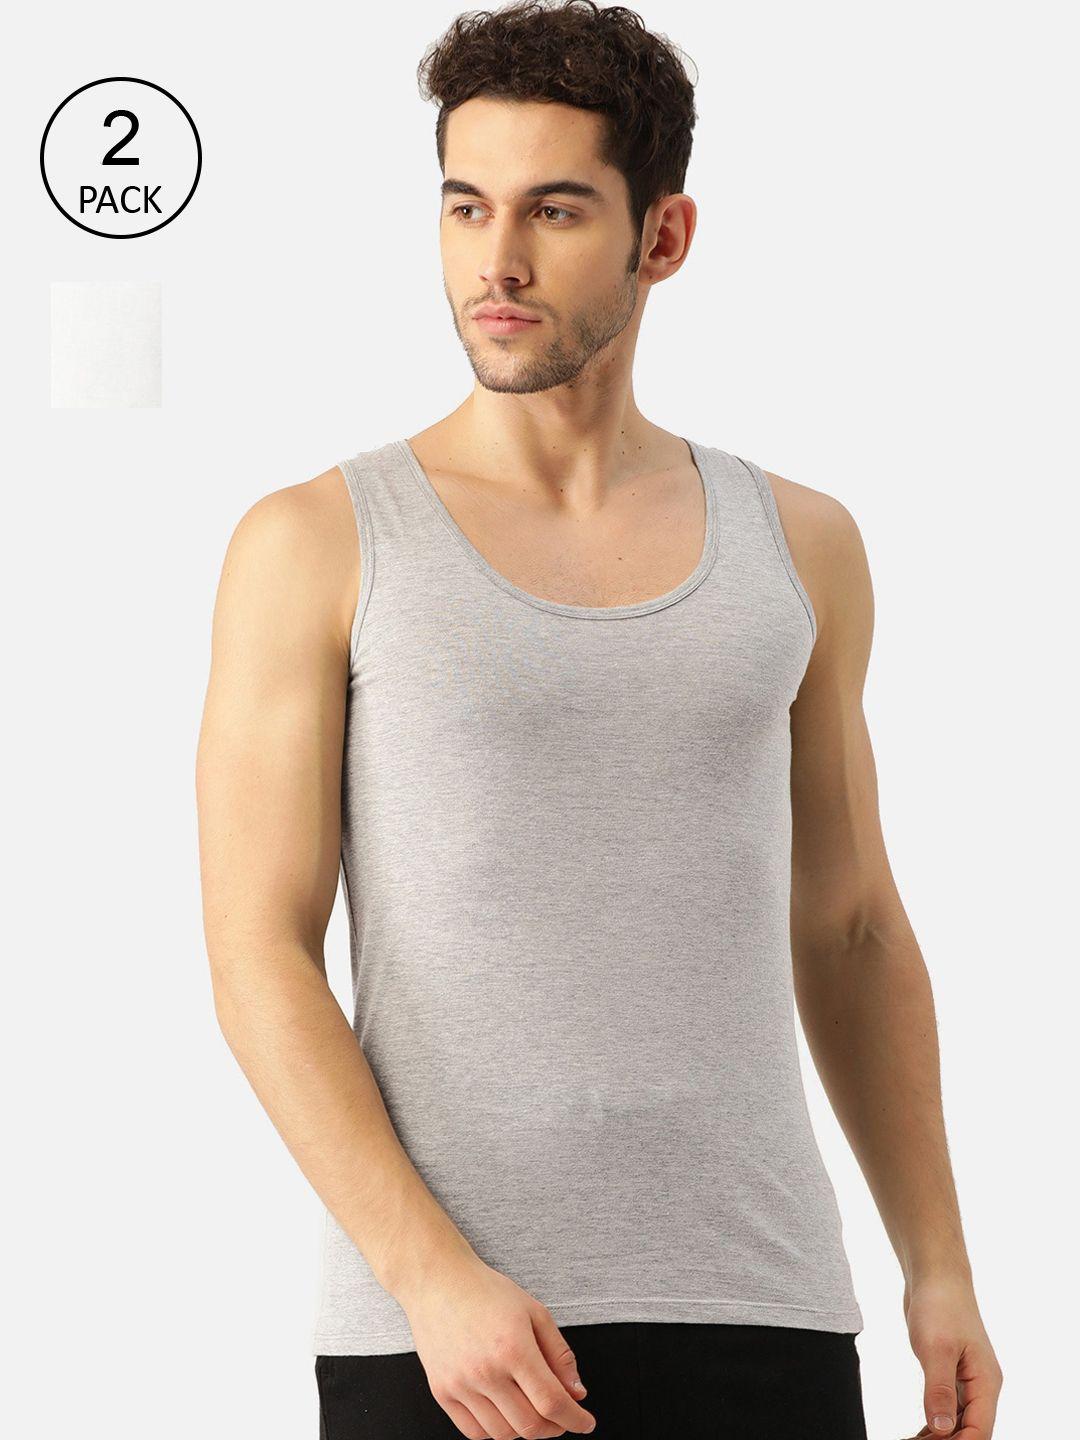 romeo-rossi-men-set-of-2-grey-&-white-solid-innerwear-vests-csvp-6001-wh-gm-2_s